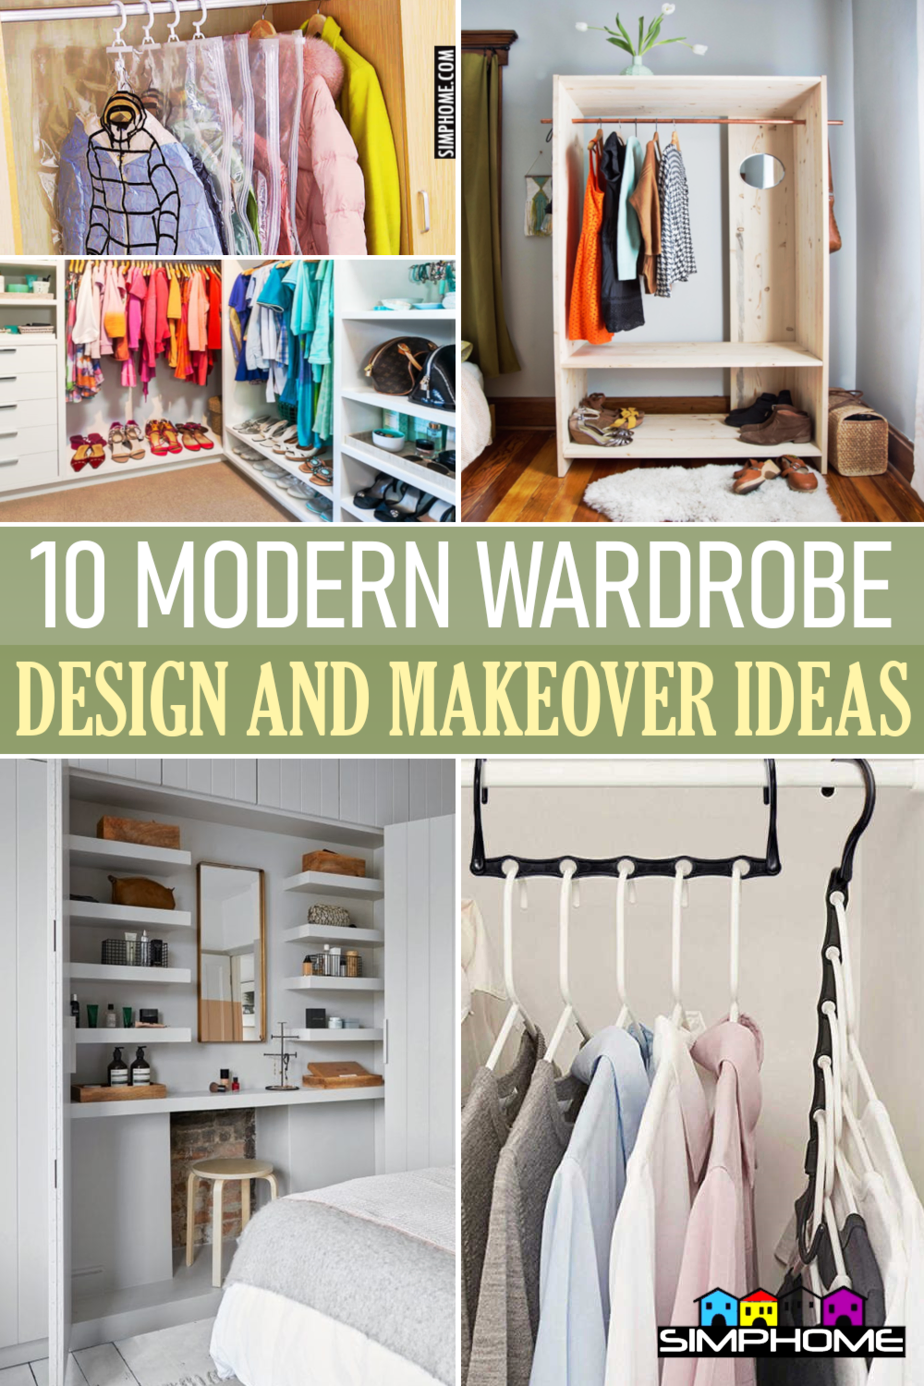 10 Modern Wardrobe Design and Makeover Ideas via Simphome.comFeatured